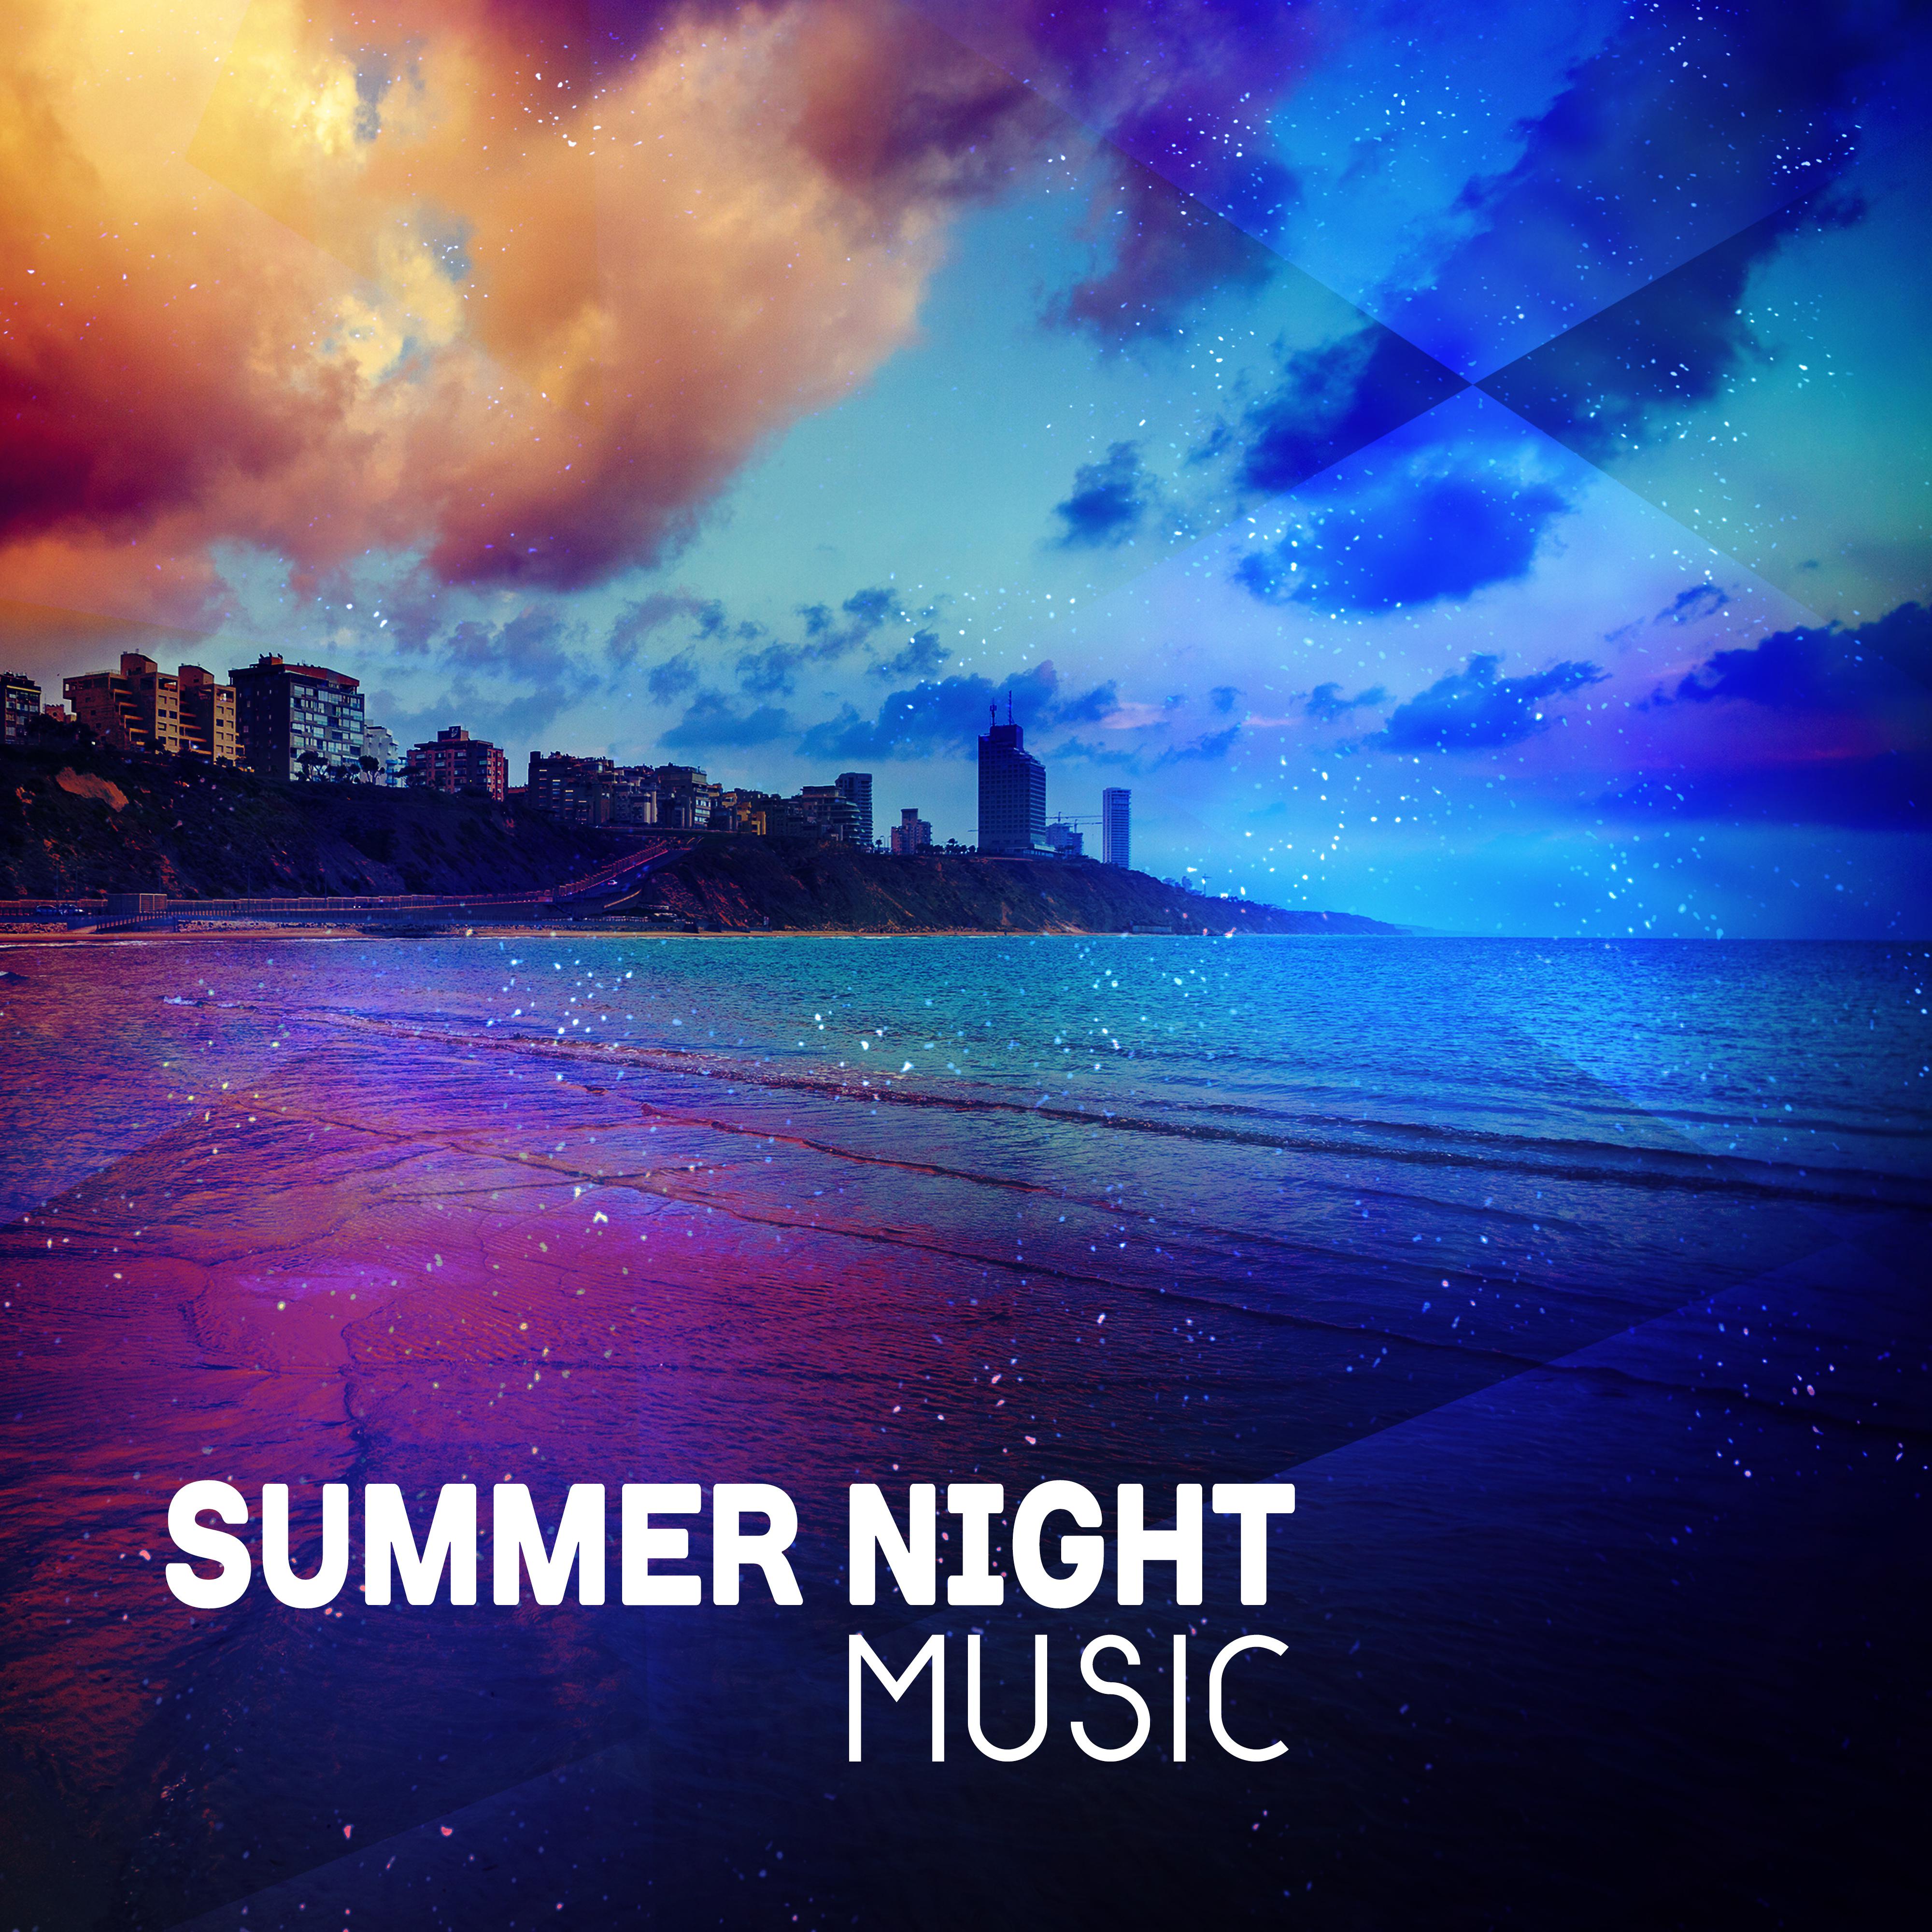 Summer Night Music – Peaceful Nature Sounds, Music for Sleep, Relaxation, Rest, Bliss, Zen, Deep Sleep, White Noise